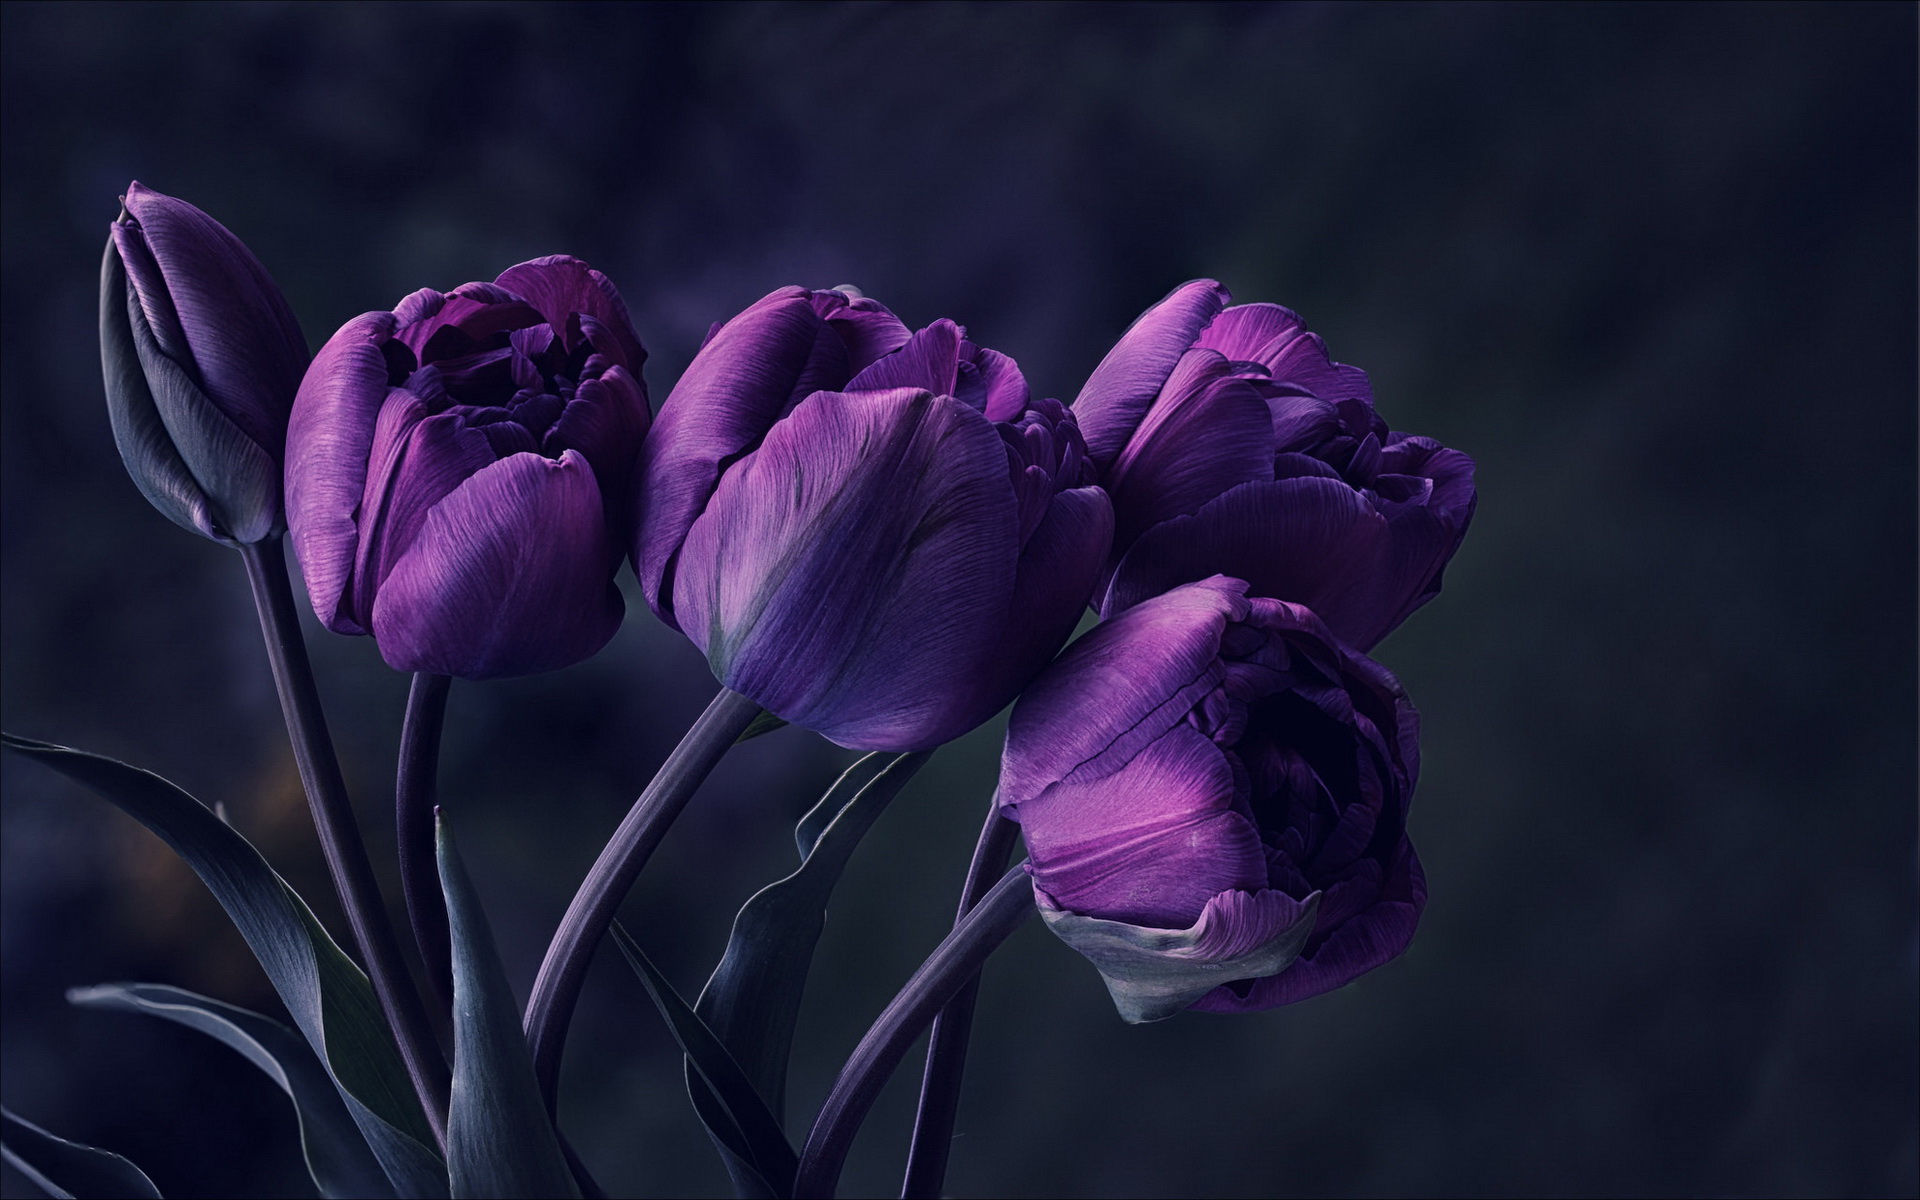 Wallpapers tulips violet flowers on the desktop